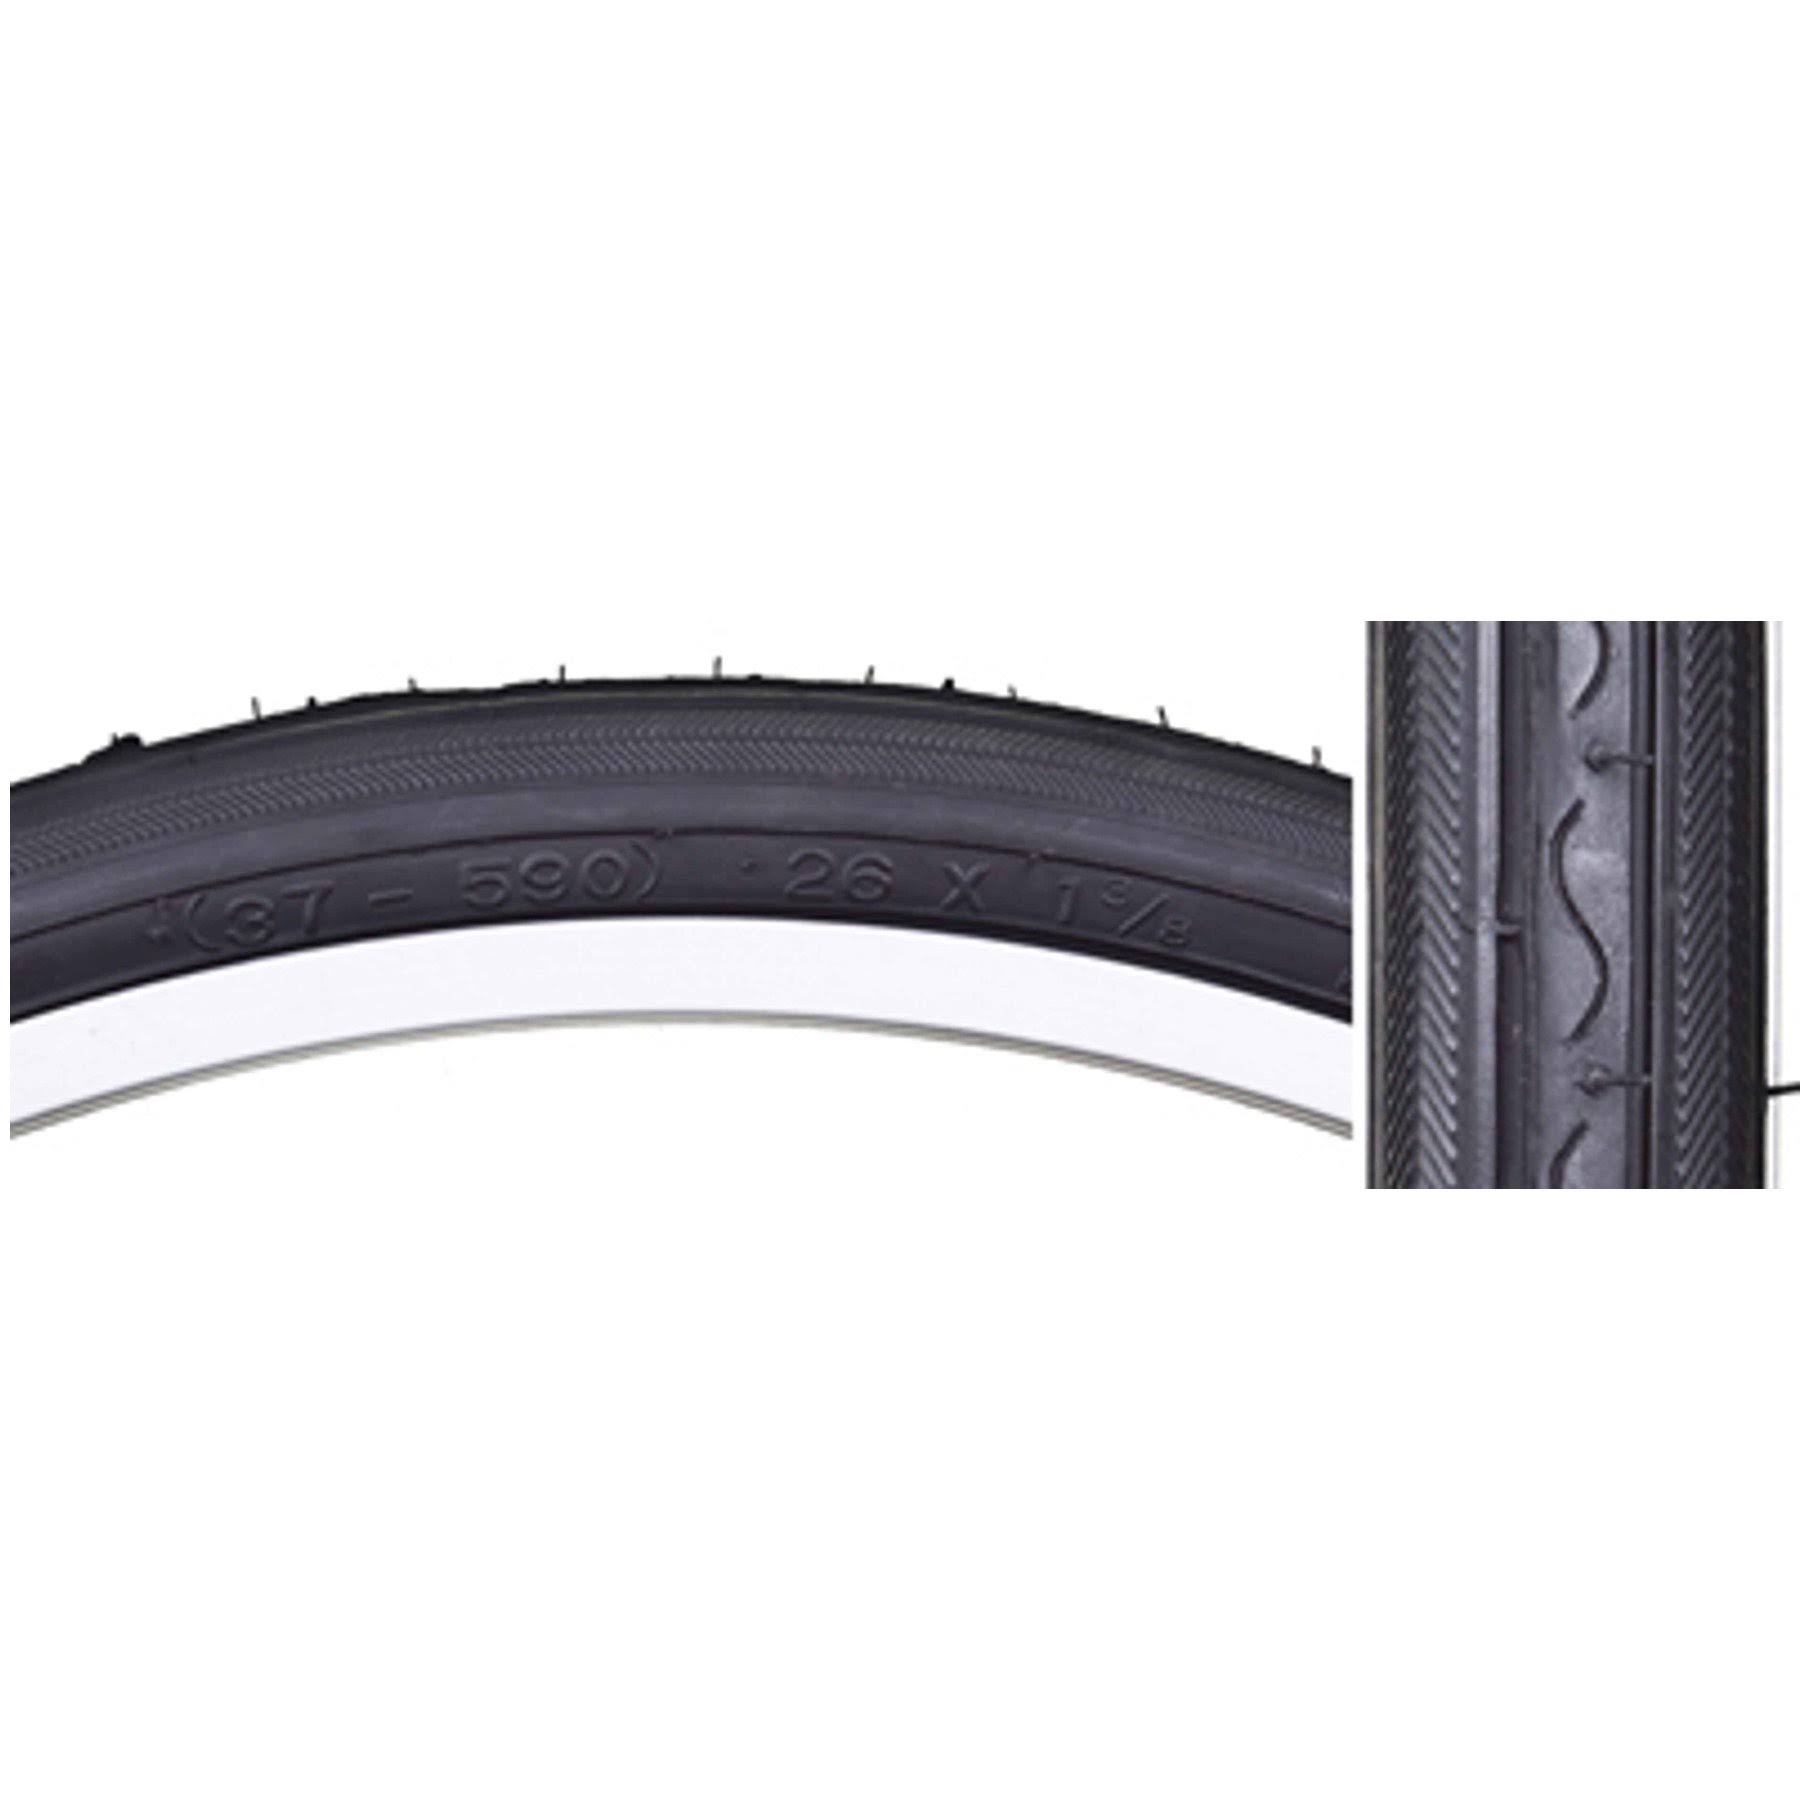 Sunlite Tire 26x1-3/8 Black/Black Road K40